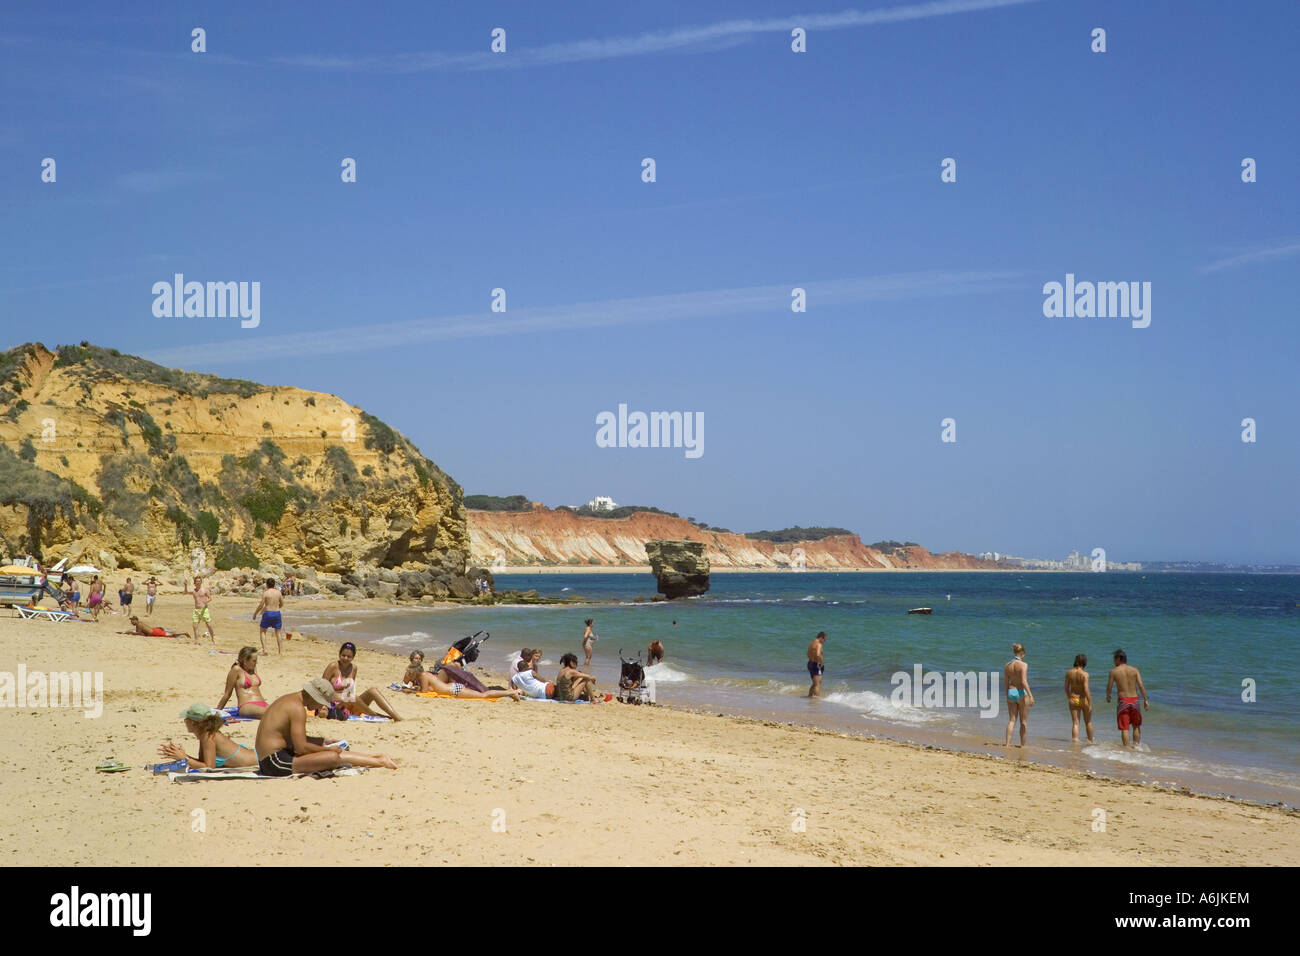 Portugal, the Algarve, Olhos de Agua beach with tourists sunbathing Stock Photo